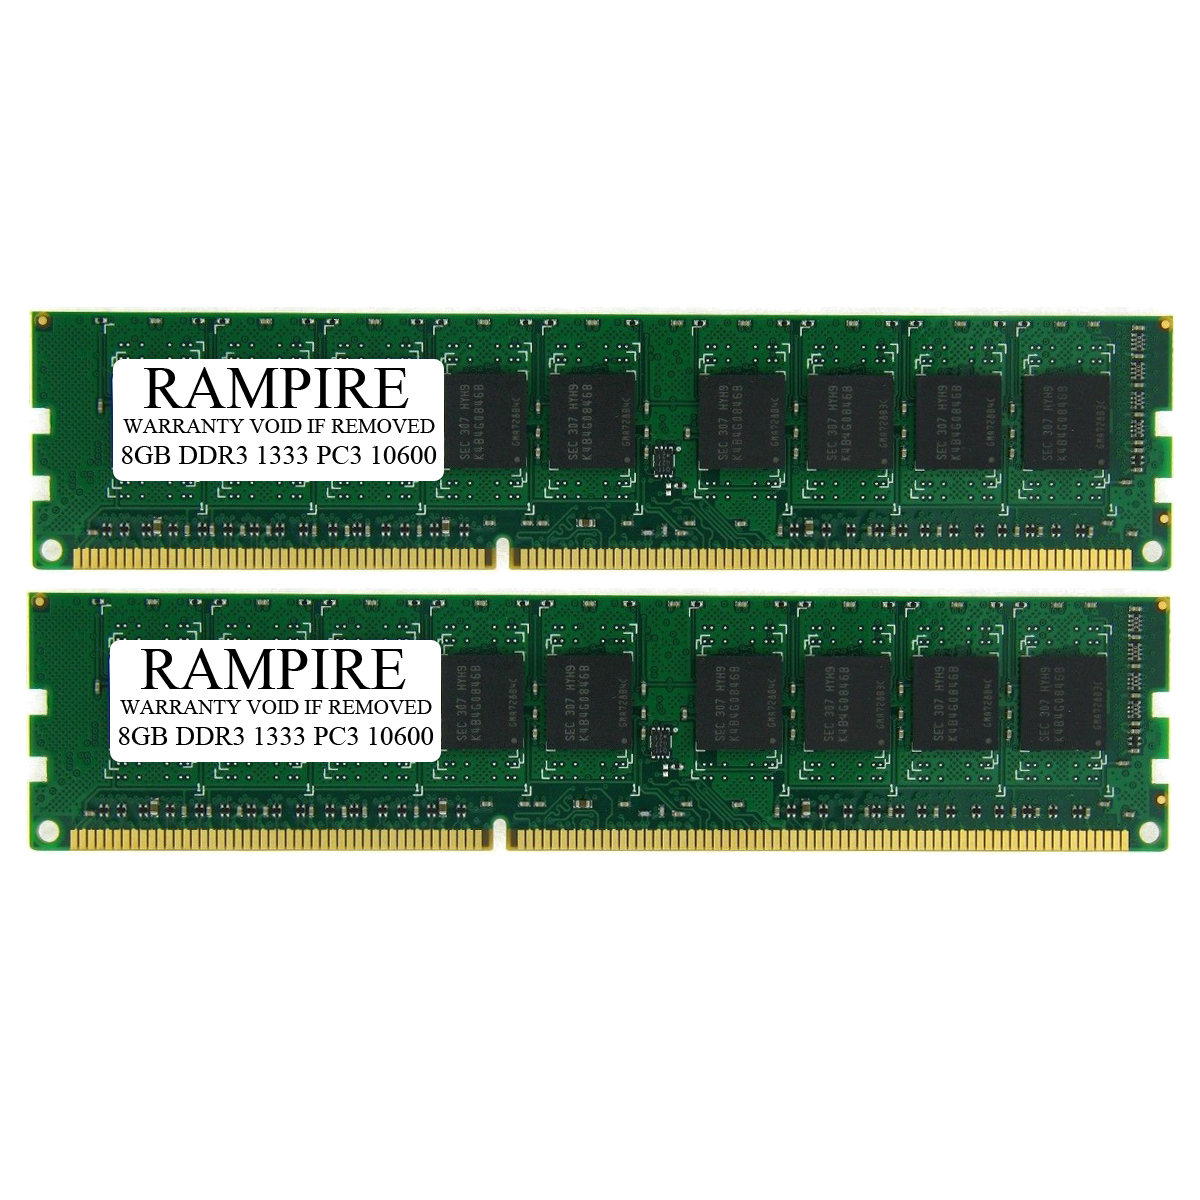 RAMPIRE 16GB (2 x 8GB) DDR3 1333 (PC3 10600) 240-Pin SDRAM 2Rx8 Standard Profile 1.5V ECC Unregistered Server Memory